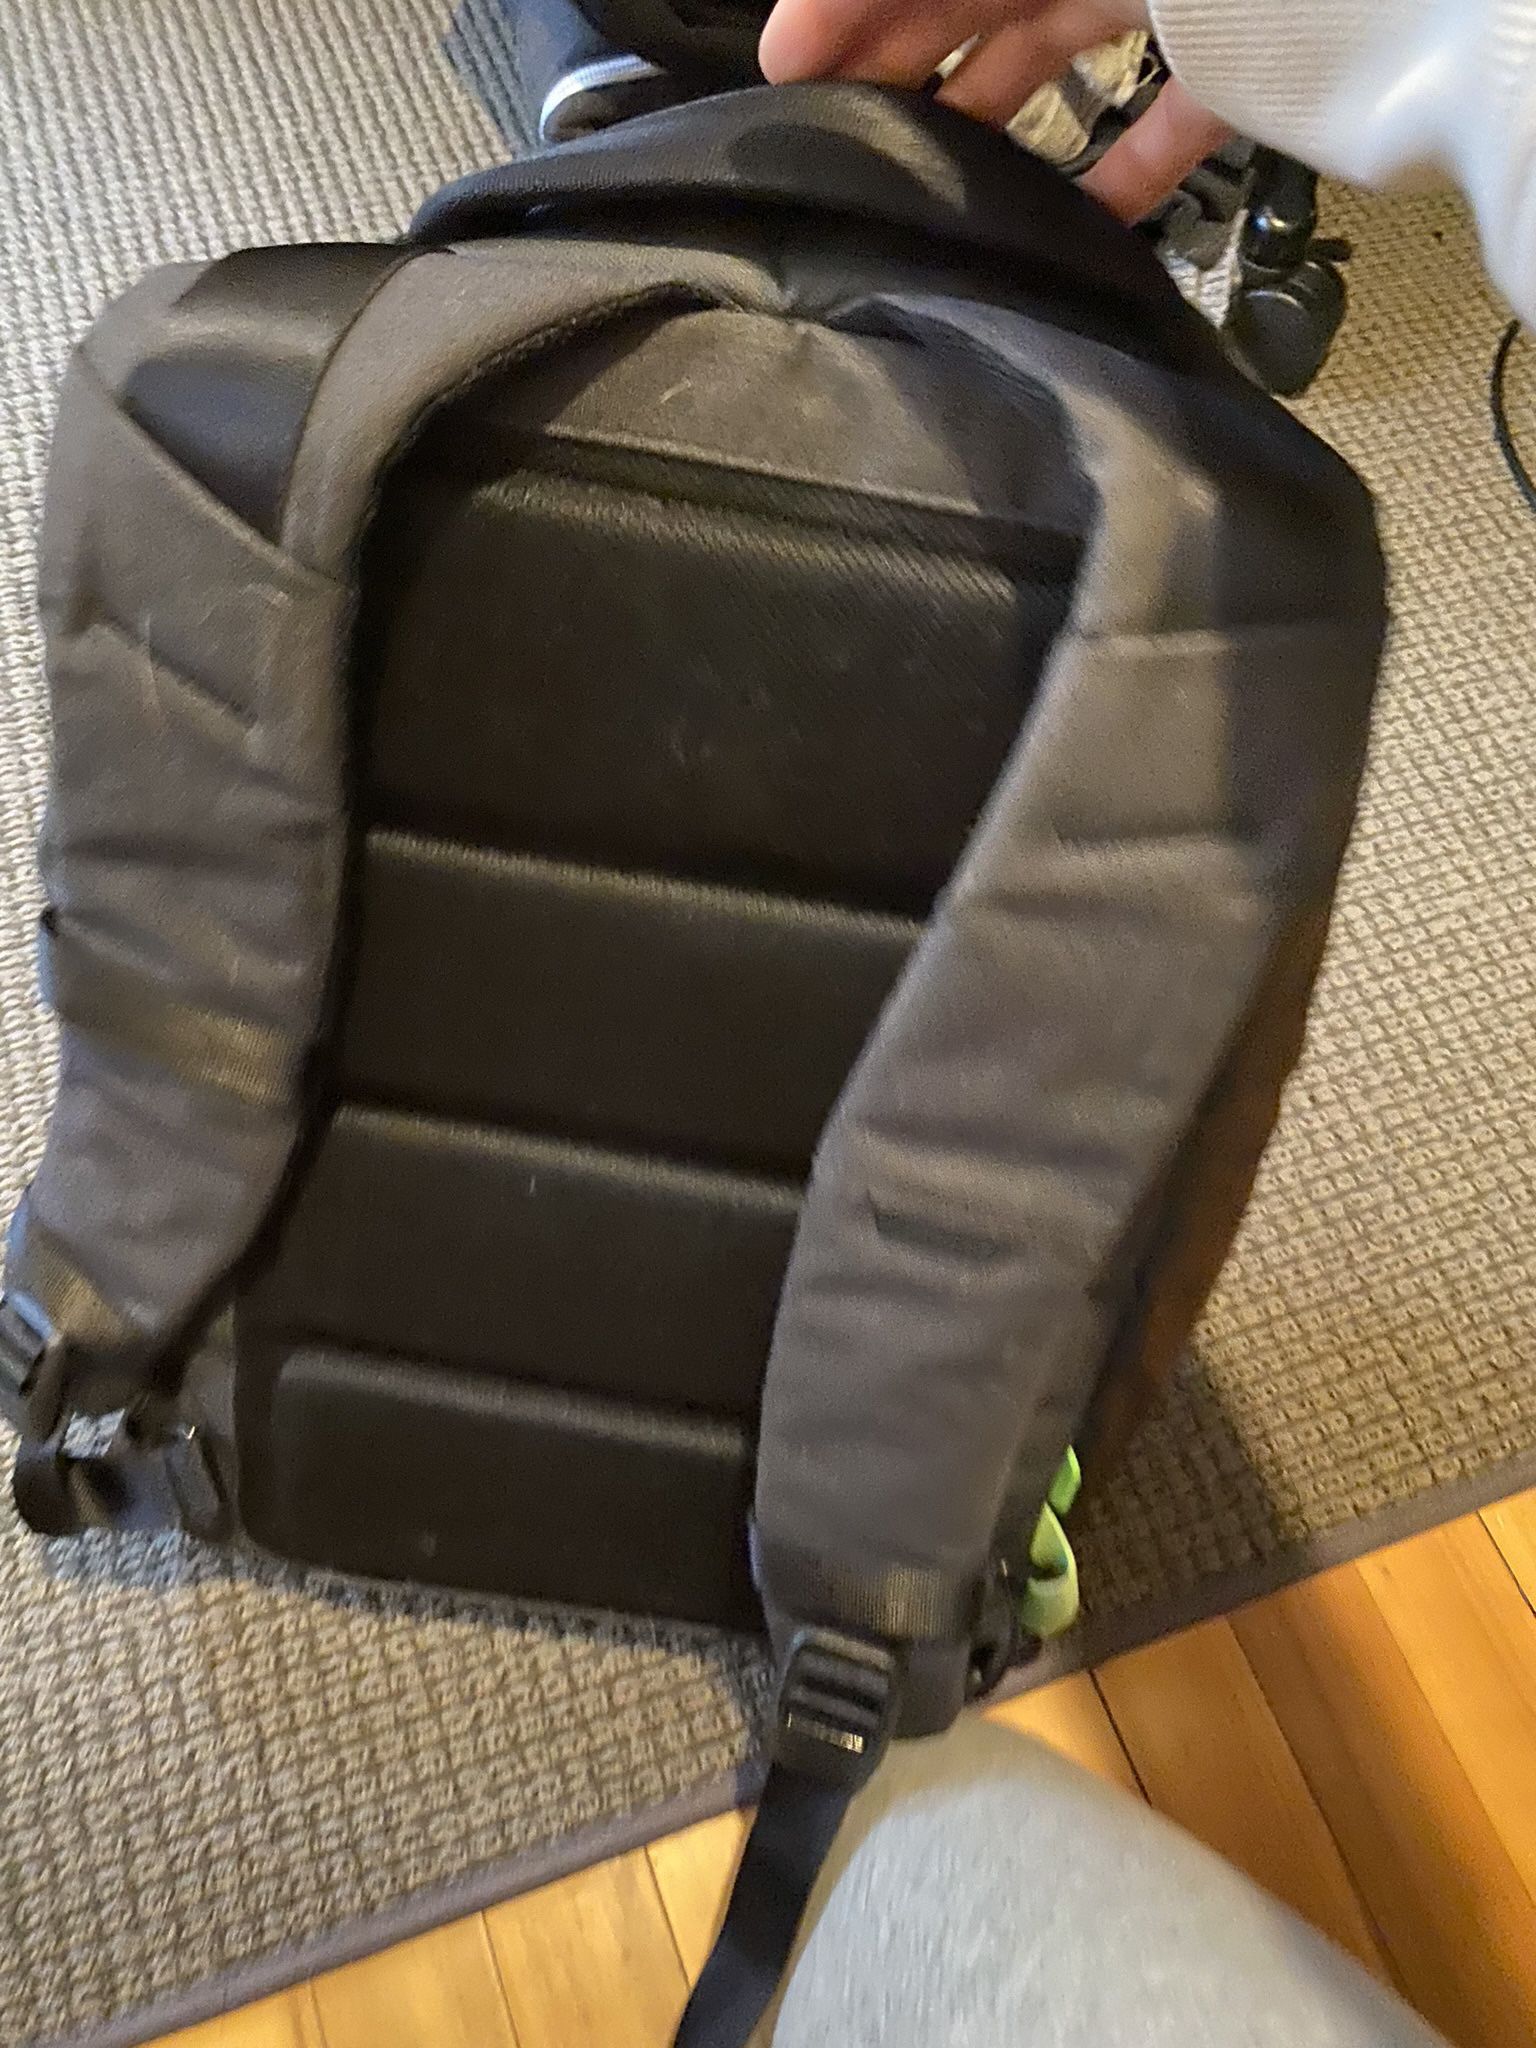 Incase backpack